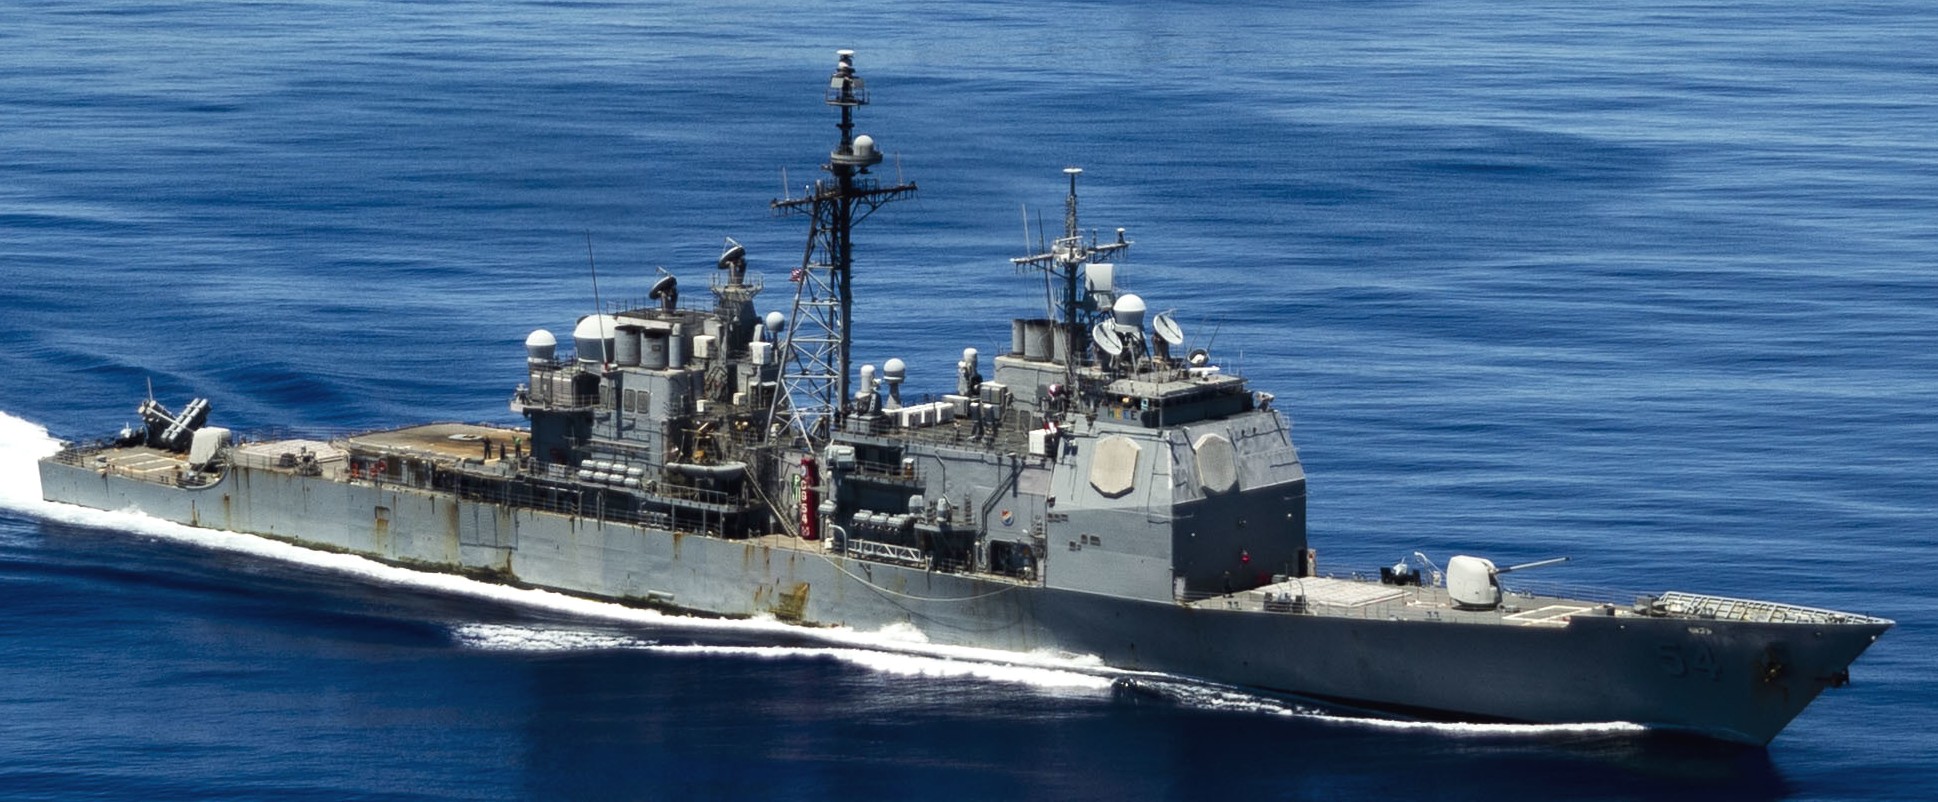 cg-54 uss antietam ticonderoga class guided missile cruiser aegis us navy valiant shield 102